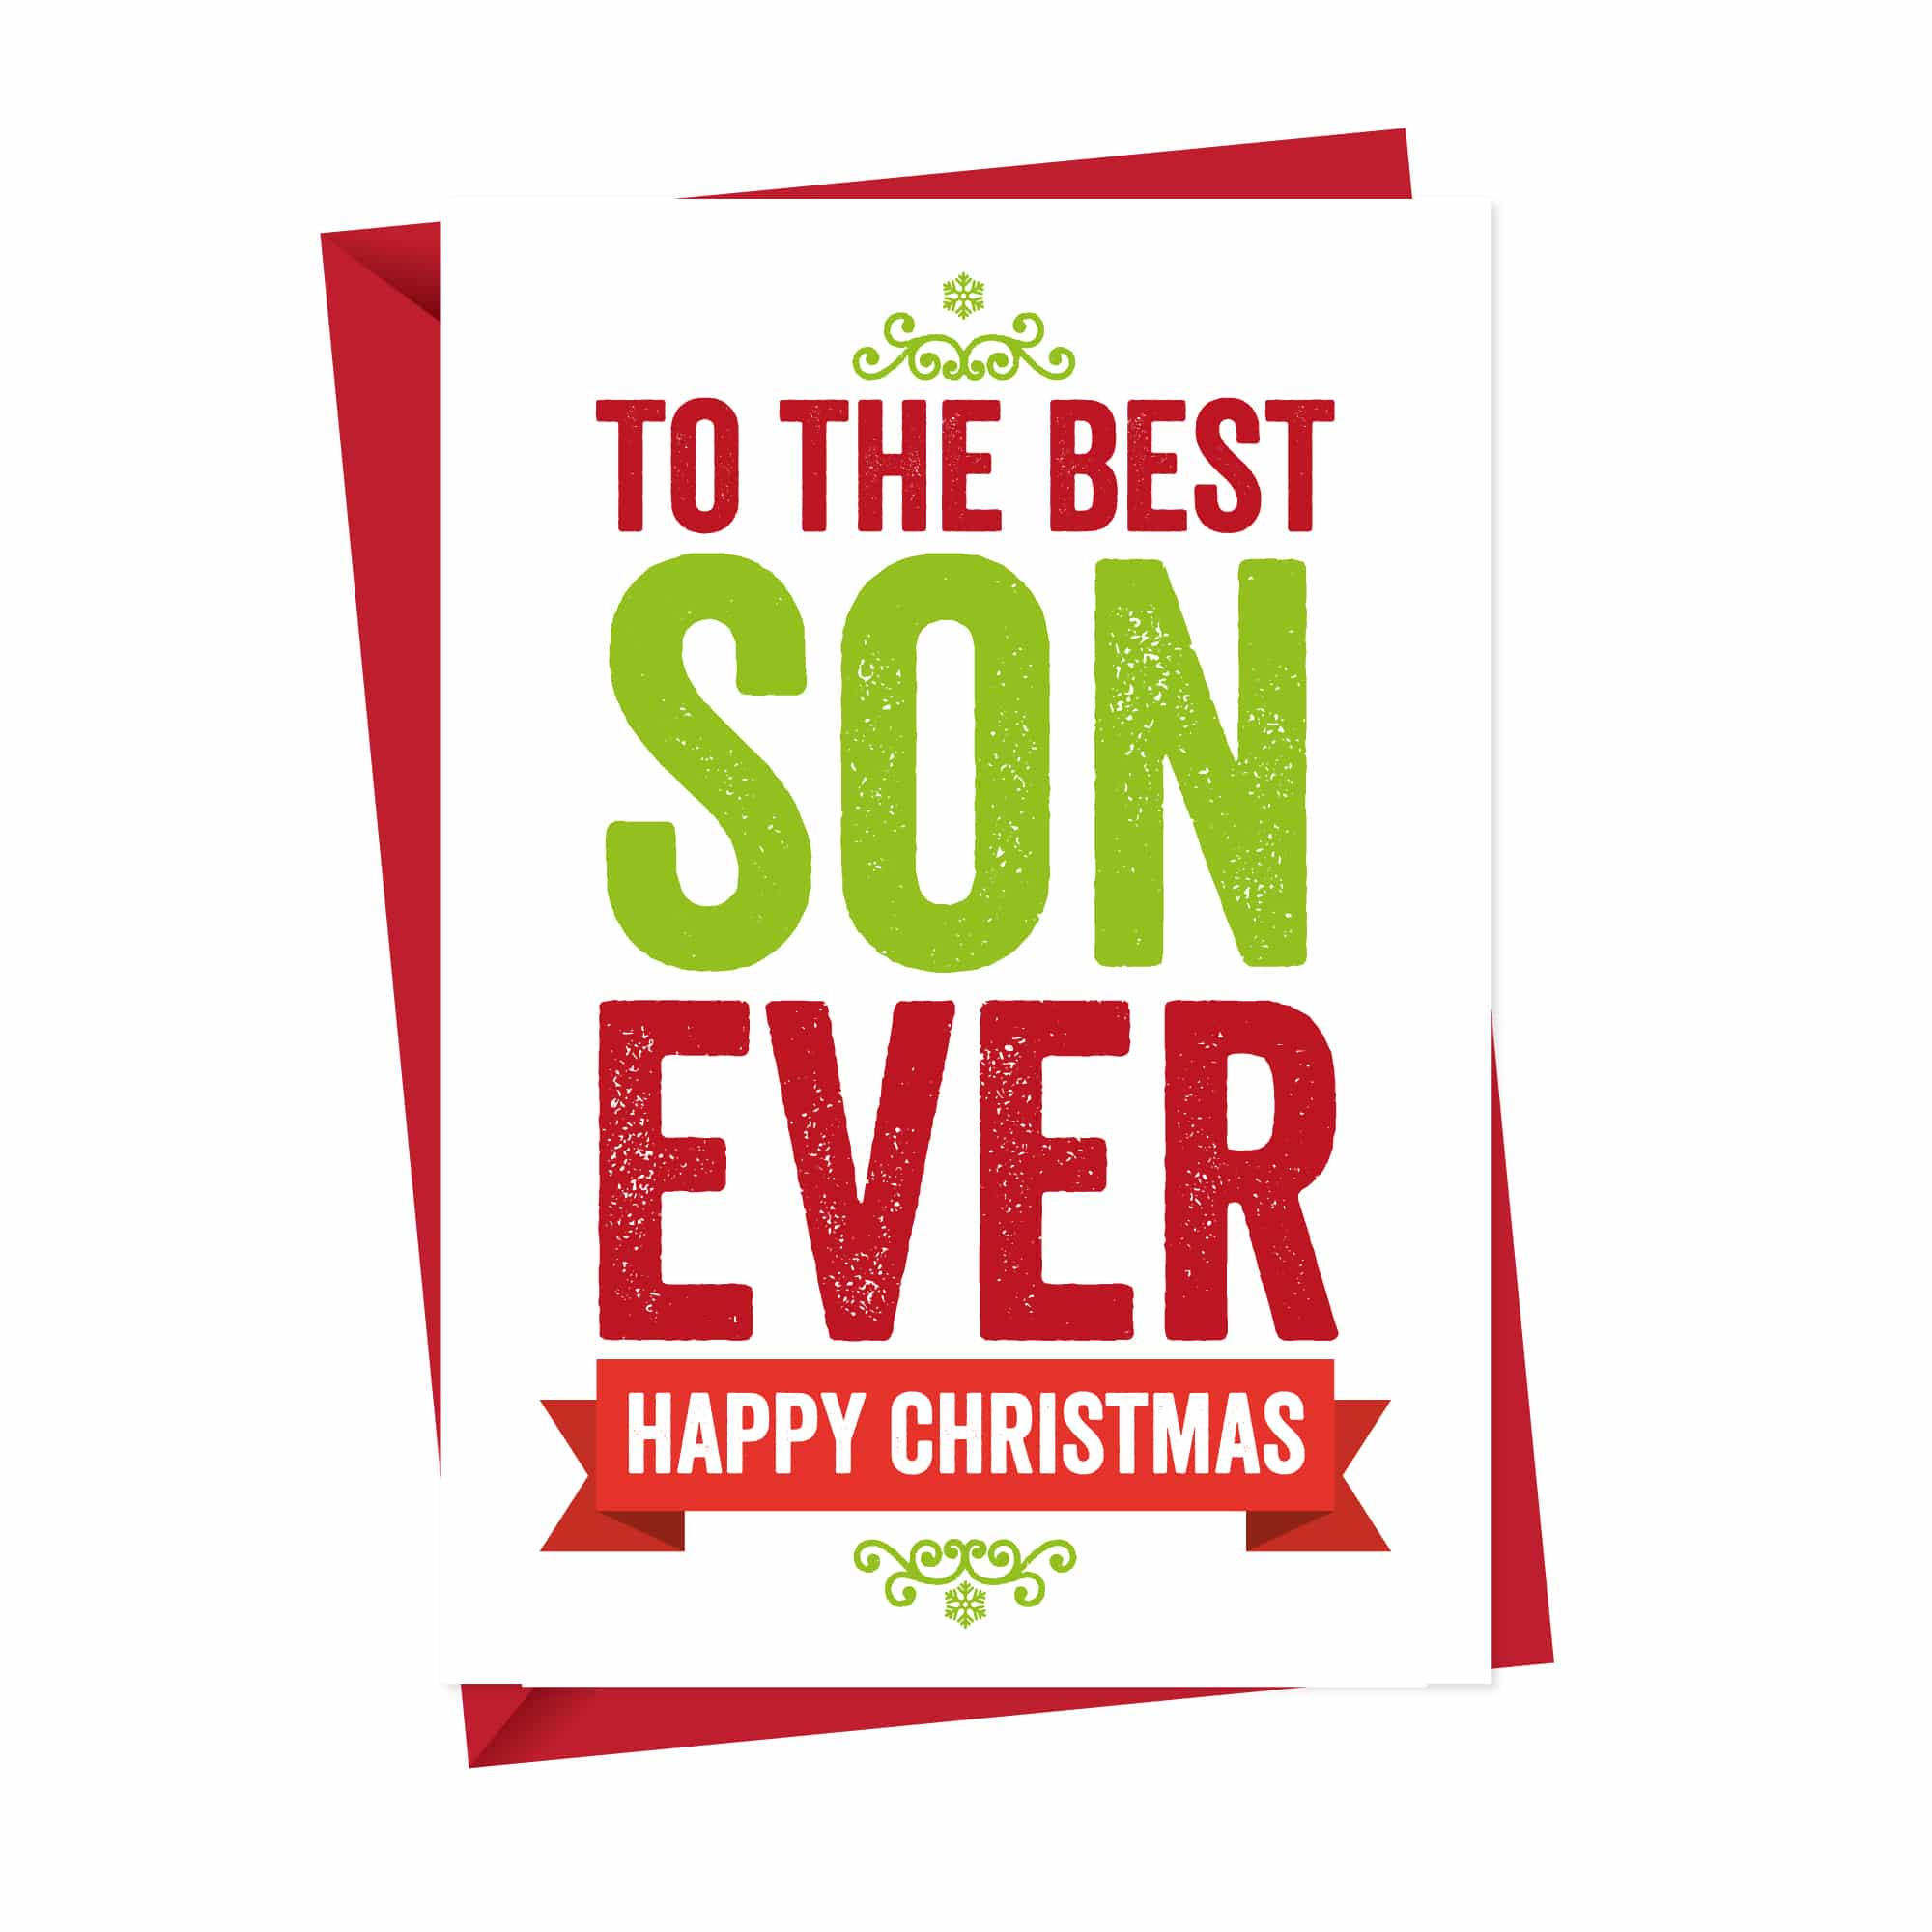 Christmas card for Son